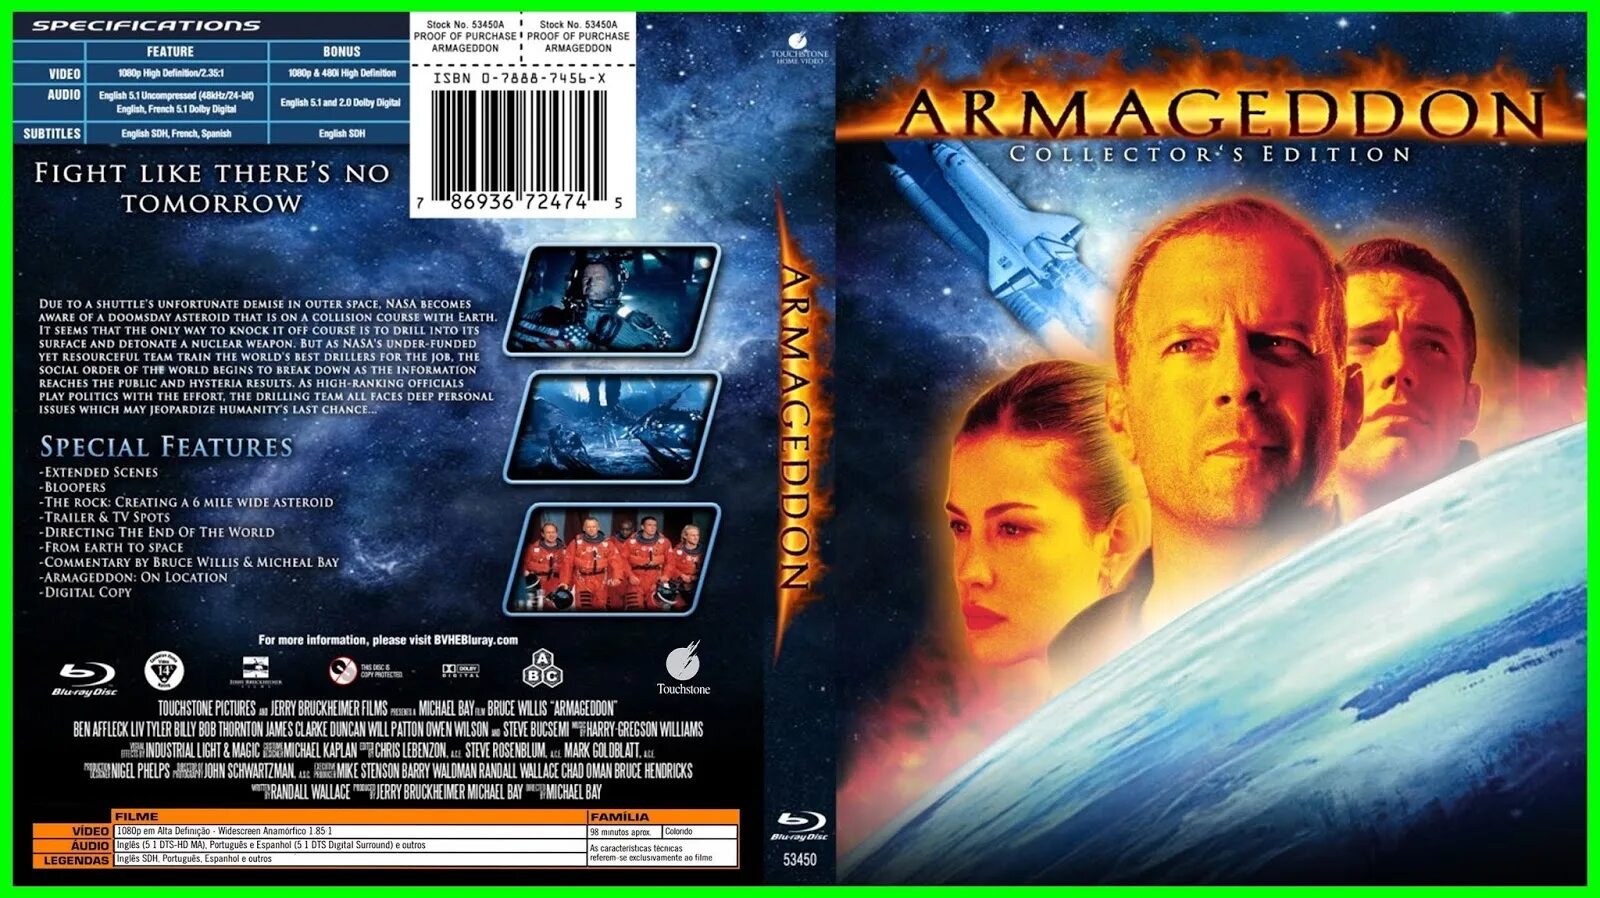 Армагеддон 1998. Armageddon 1998 DVD Cover. Cover. Обложка DVD Армагеддон. 1998. Армагеддон купить